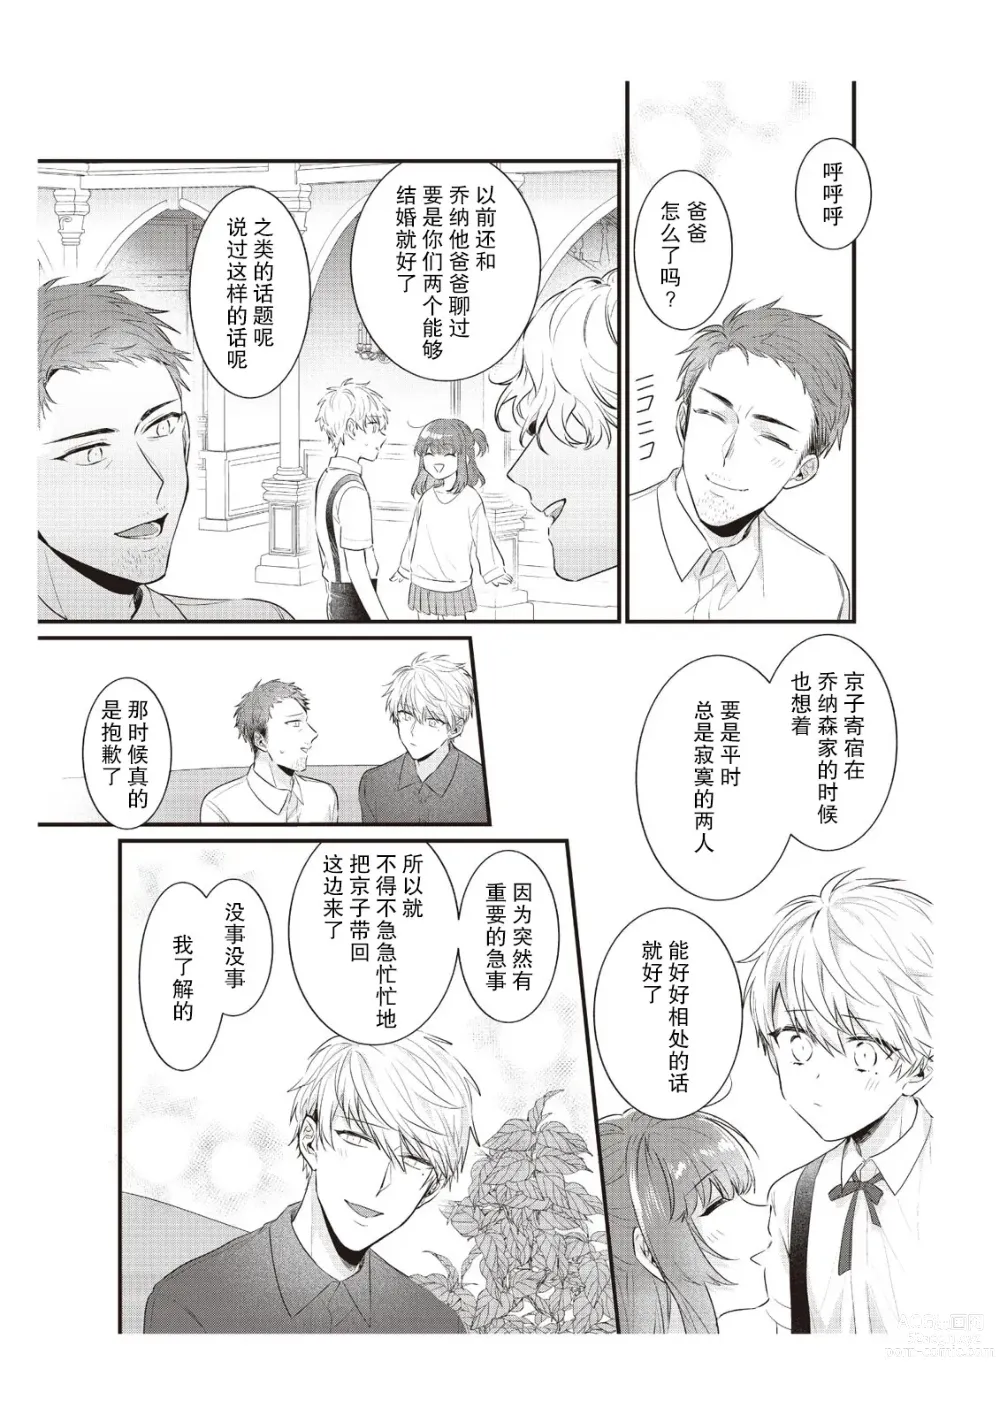 Page 215 of manga 在电车里，上课。和老师。1-9 end